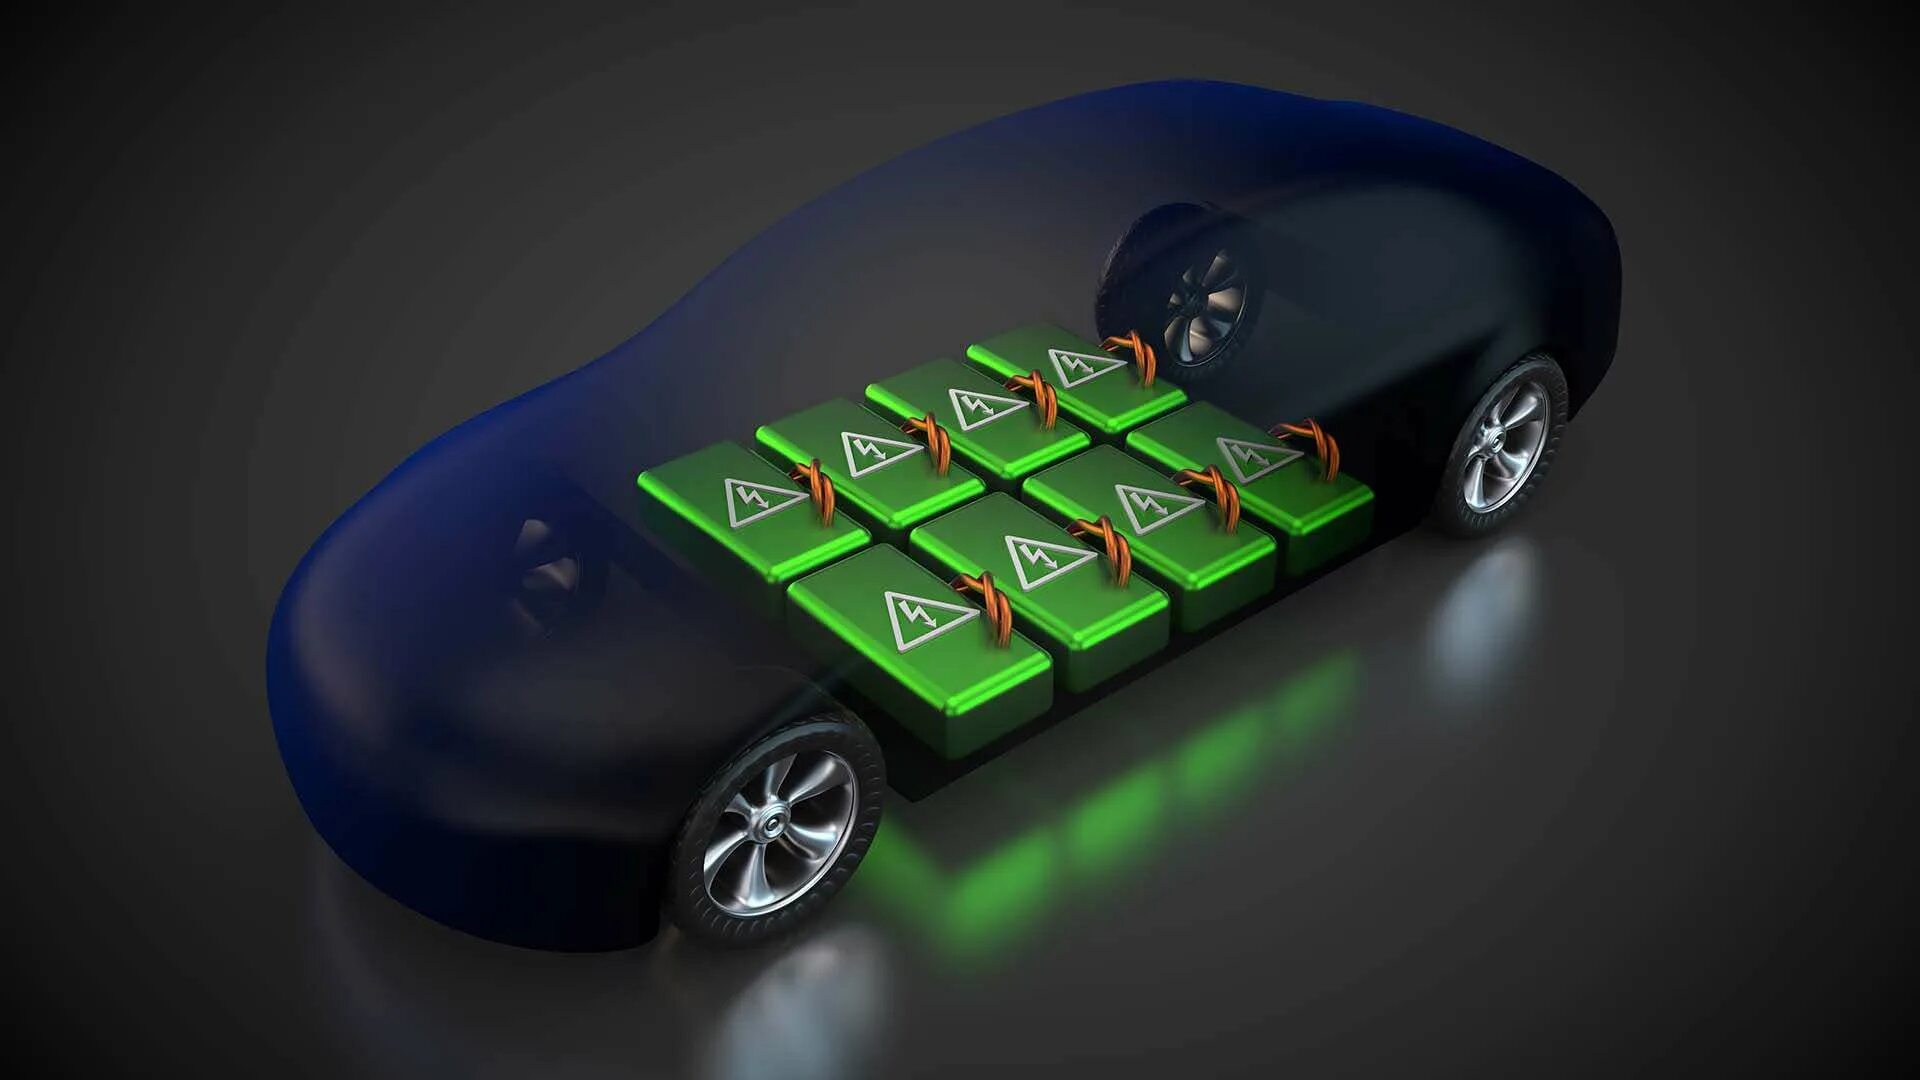 Electric car Lithium ion Batteries. Electric vehicle Battery. Электромобиль будущего. Литий для электромобилей.